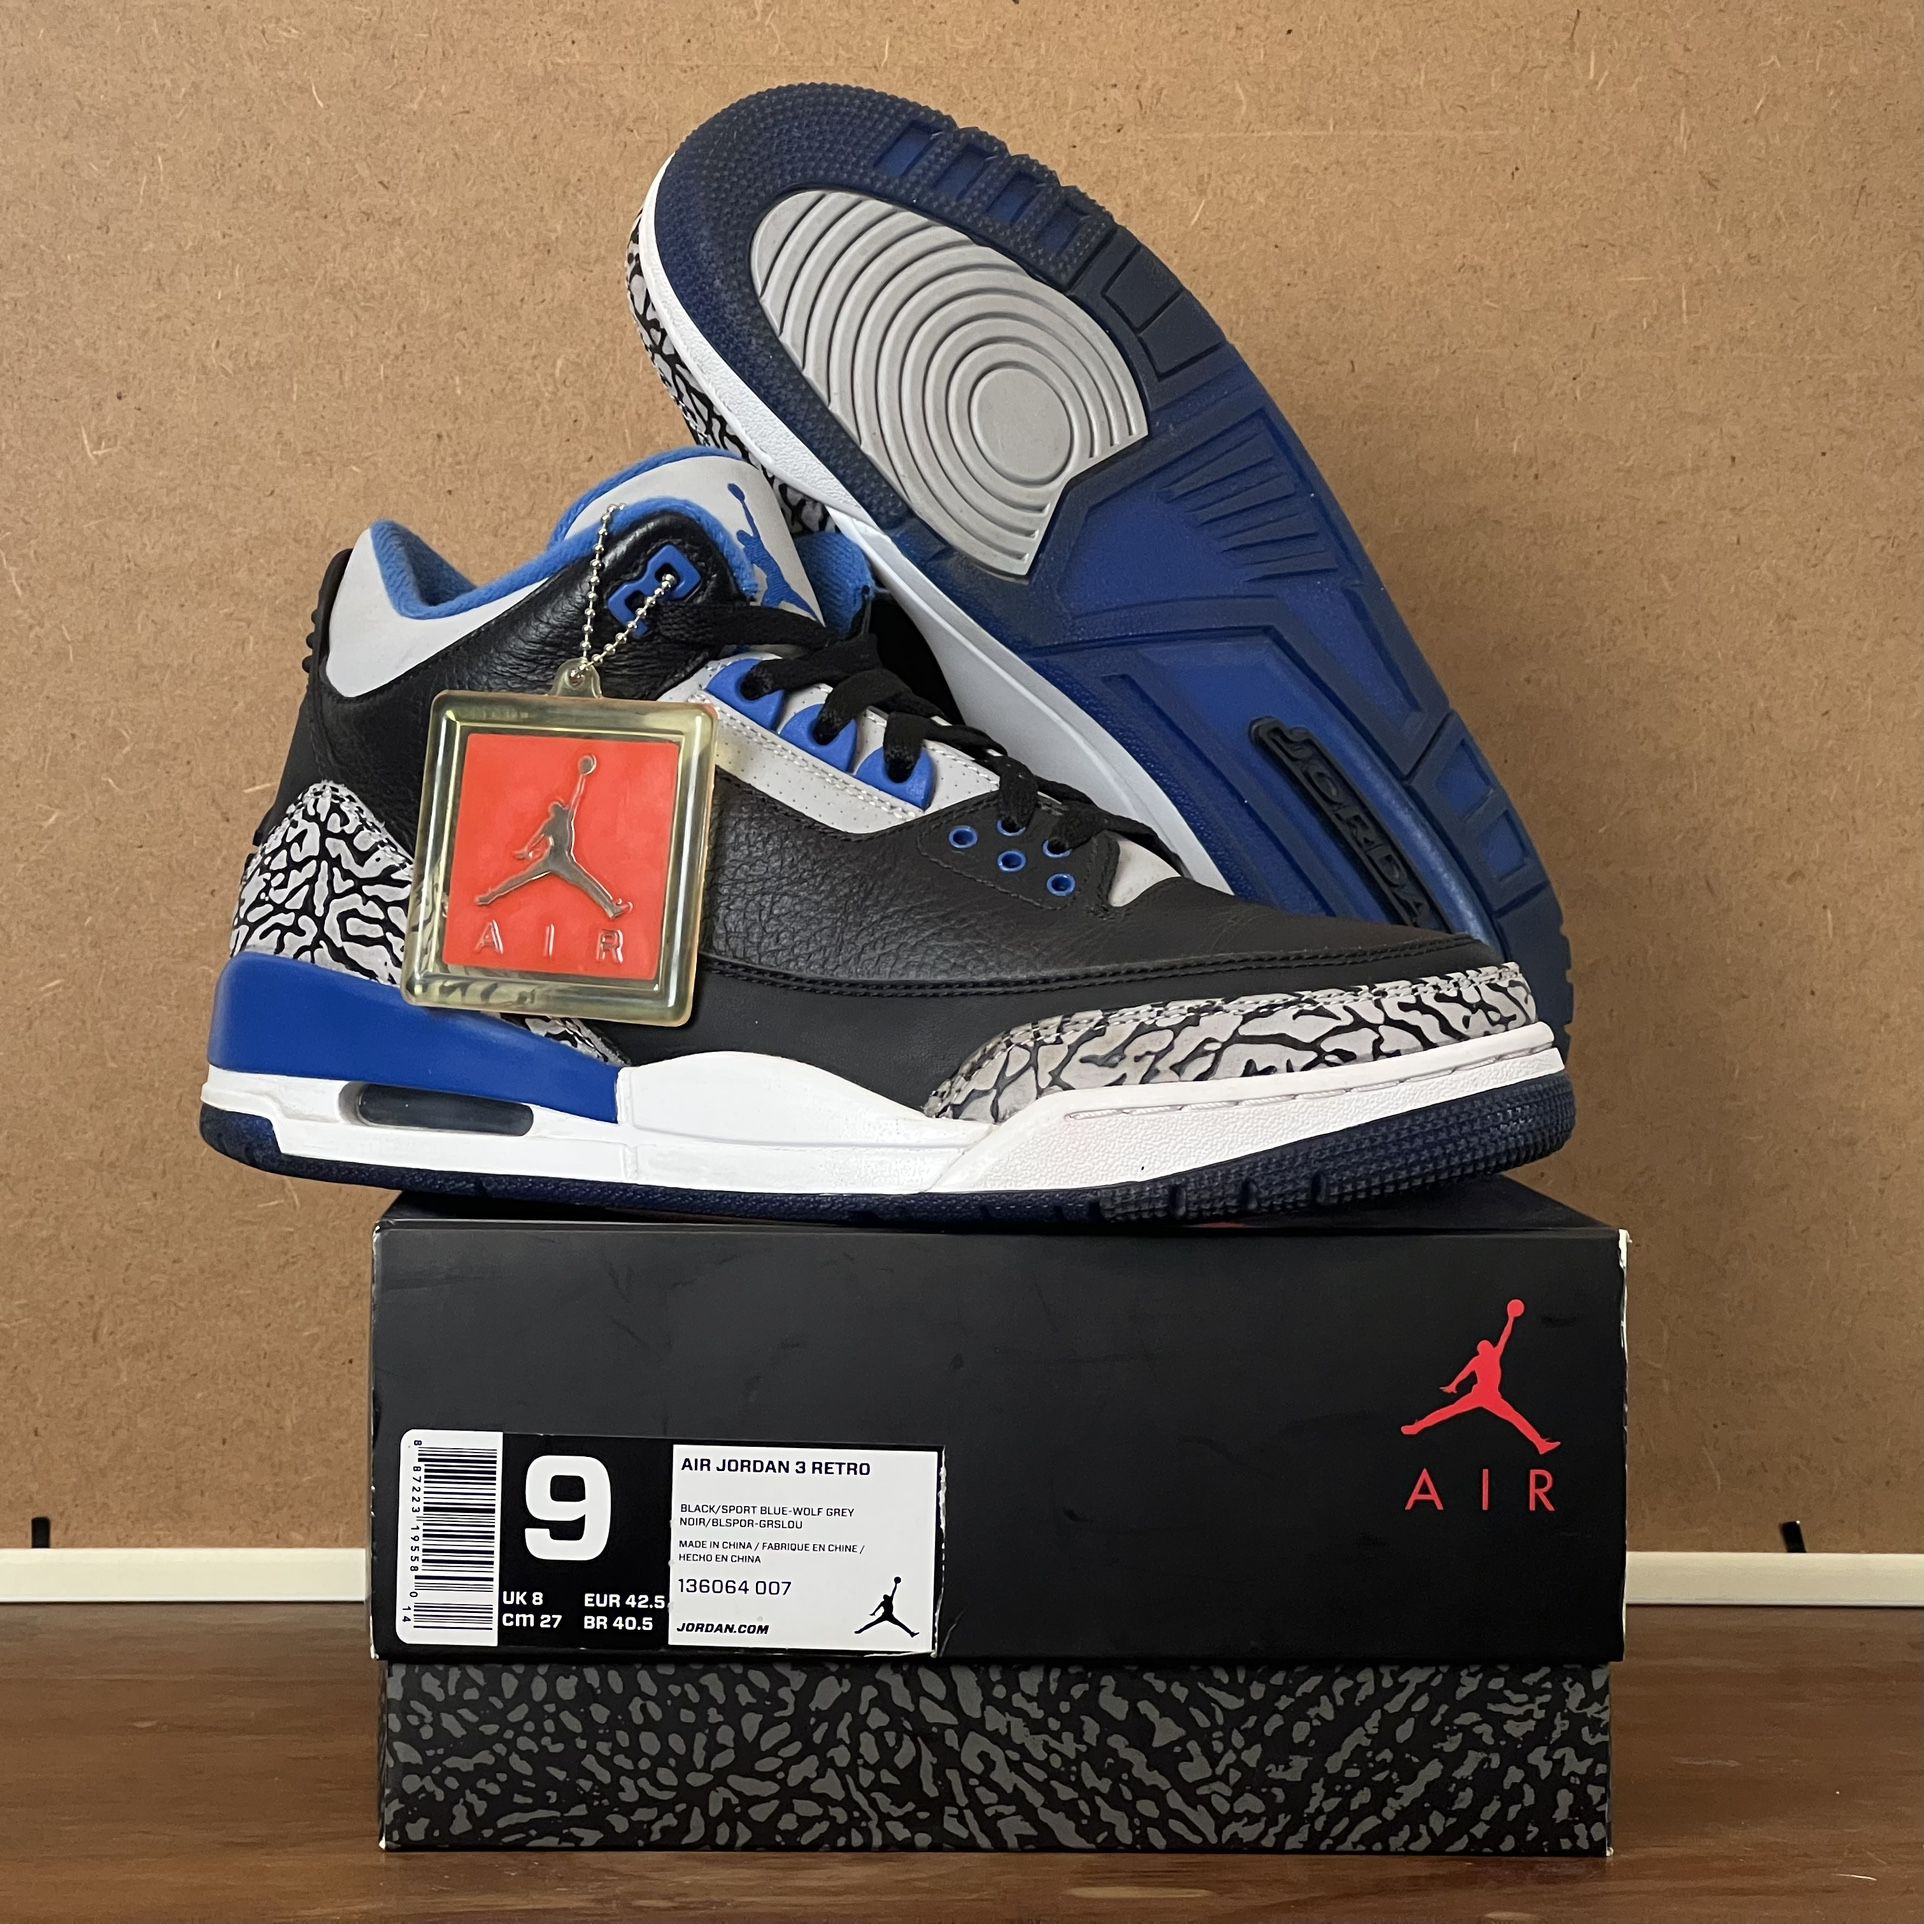 Nike Air Jordan 3 Retro “ Sports Blue” Size 9